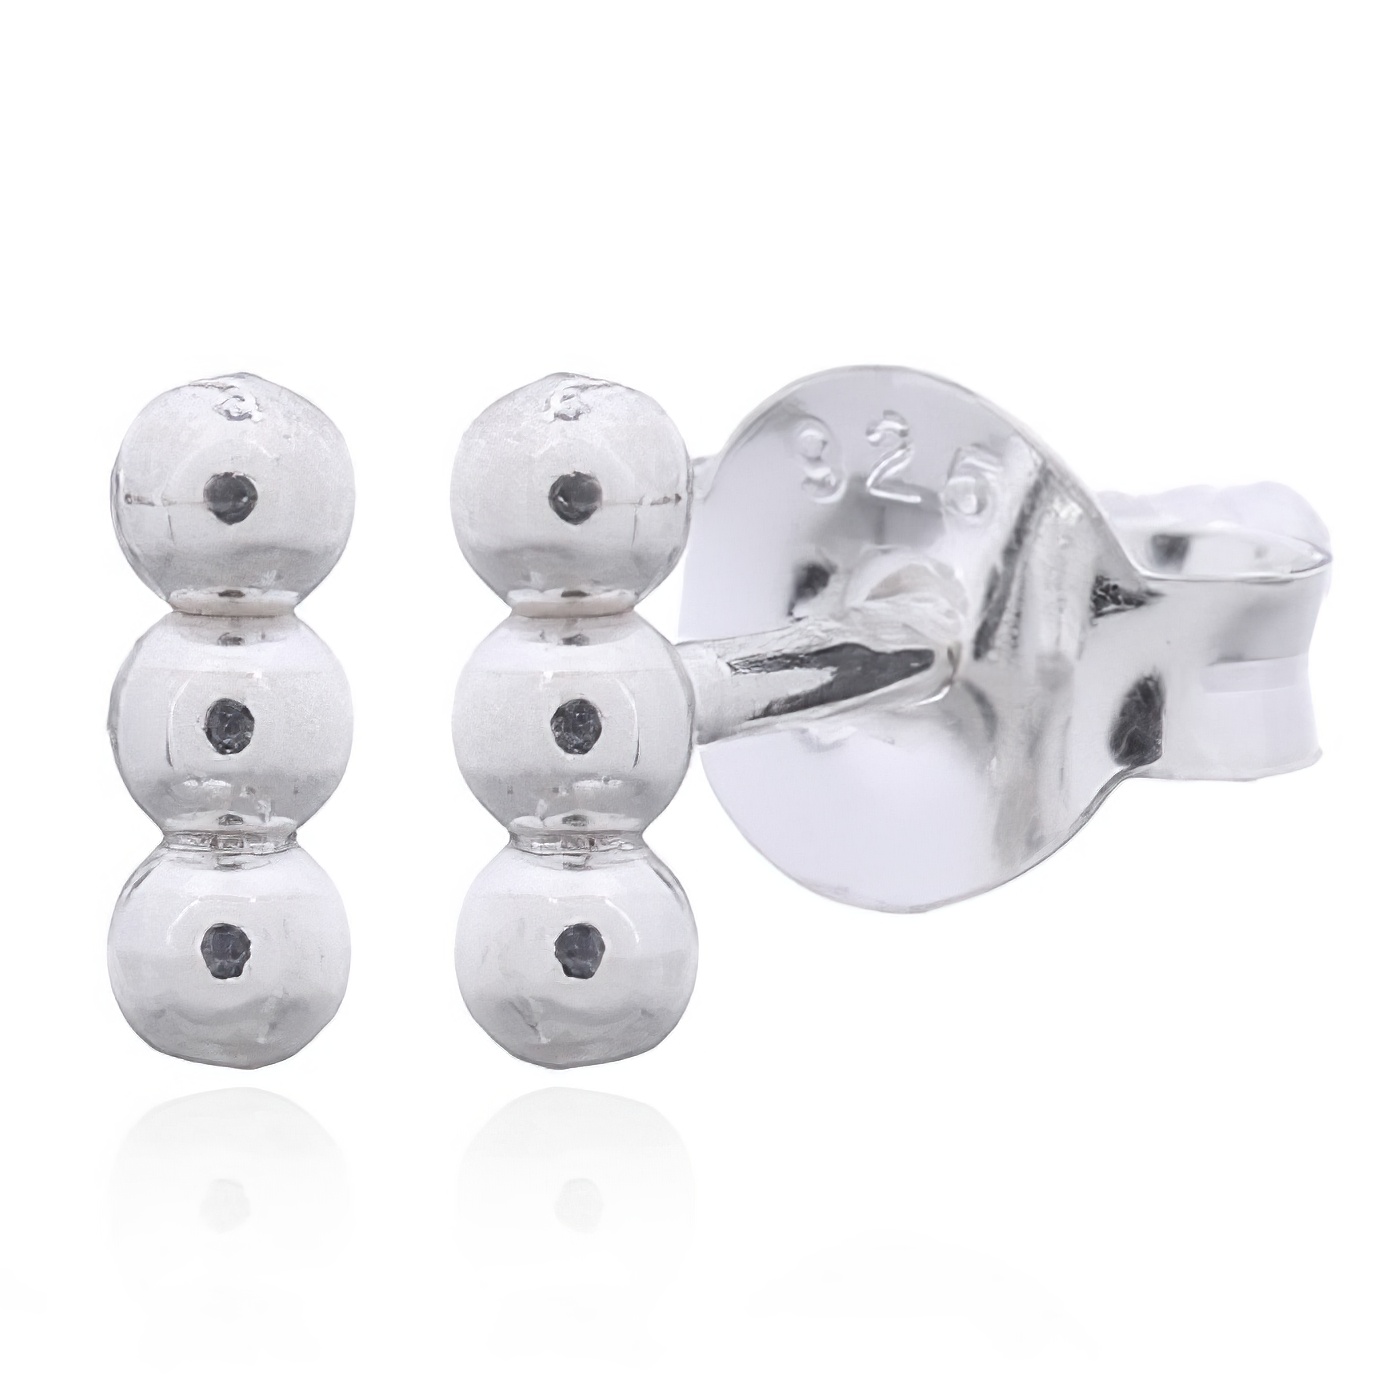 Three Dots Minimalist Stud Earrings 925 Silver by BeYindi 